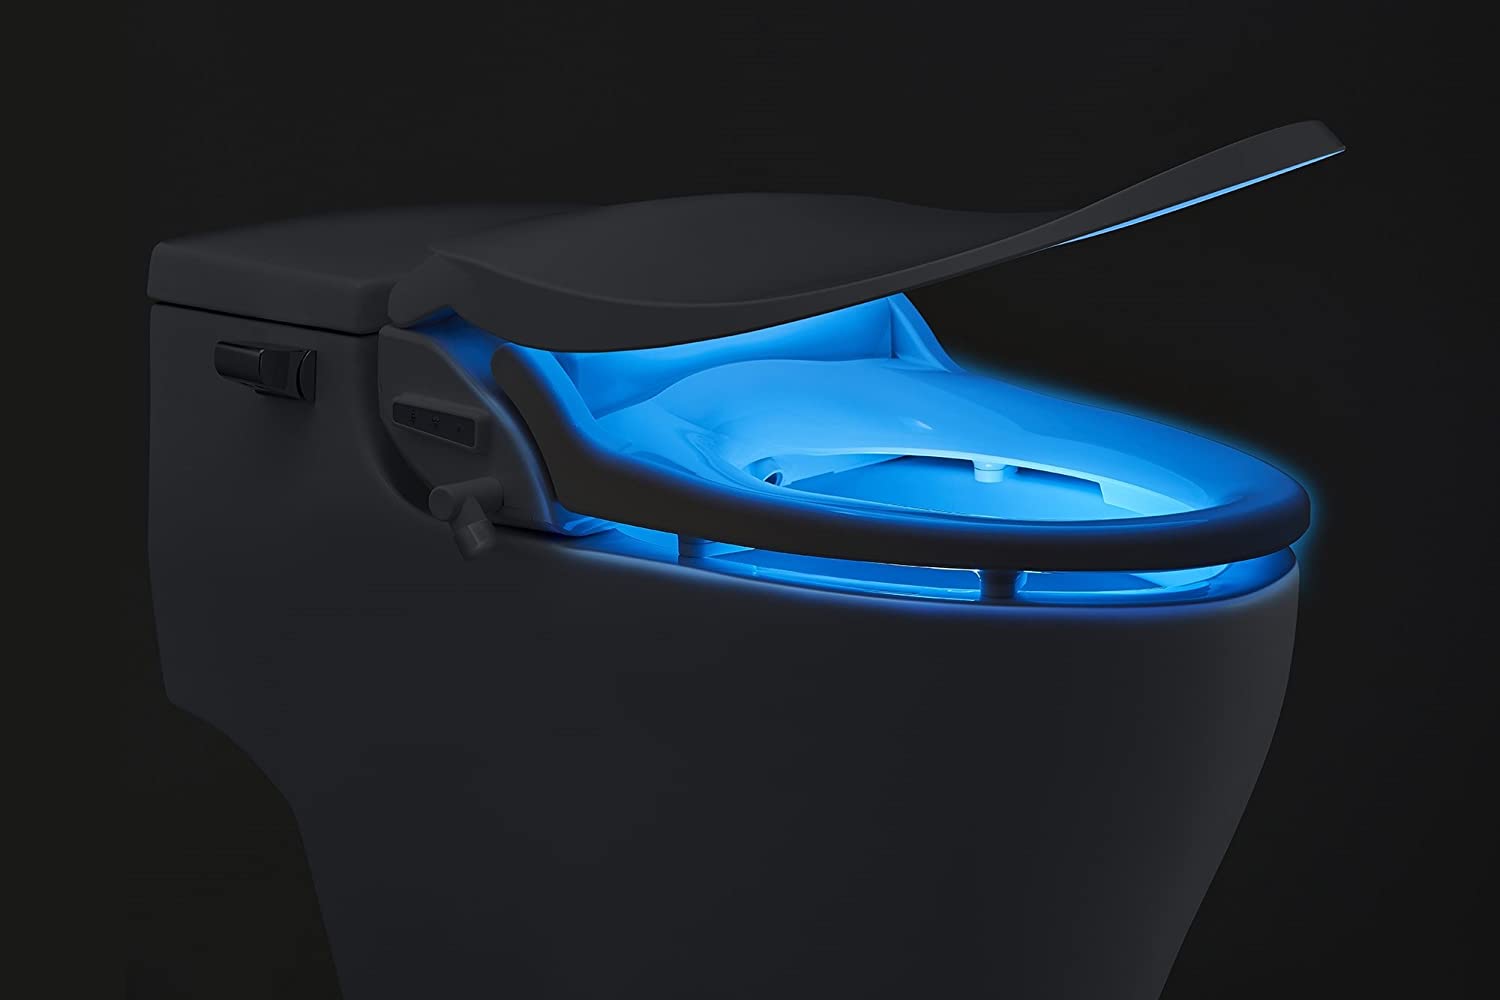 Alpha iX Hybrid Bidet Toilet Seat w/ Remote 4 Wash Functions Air Dryer